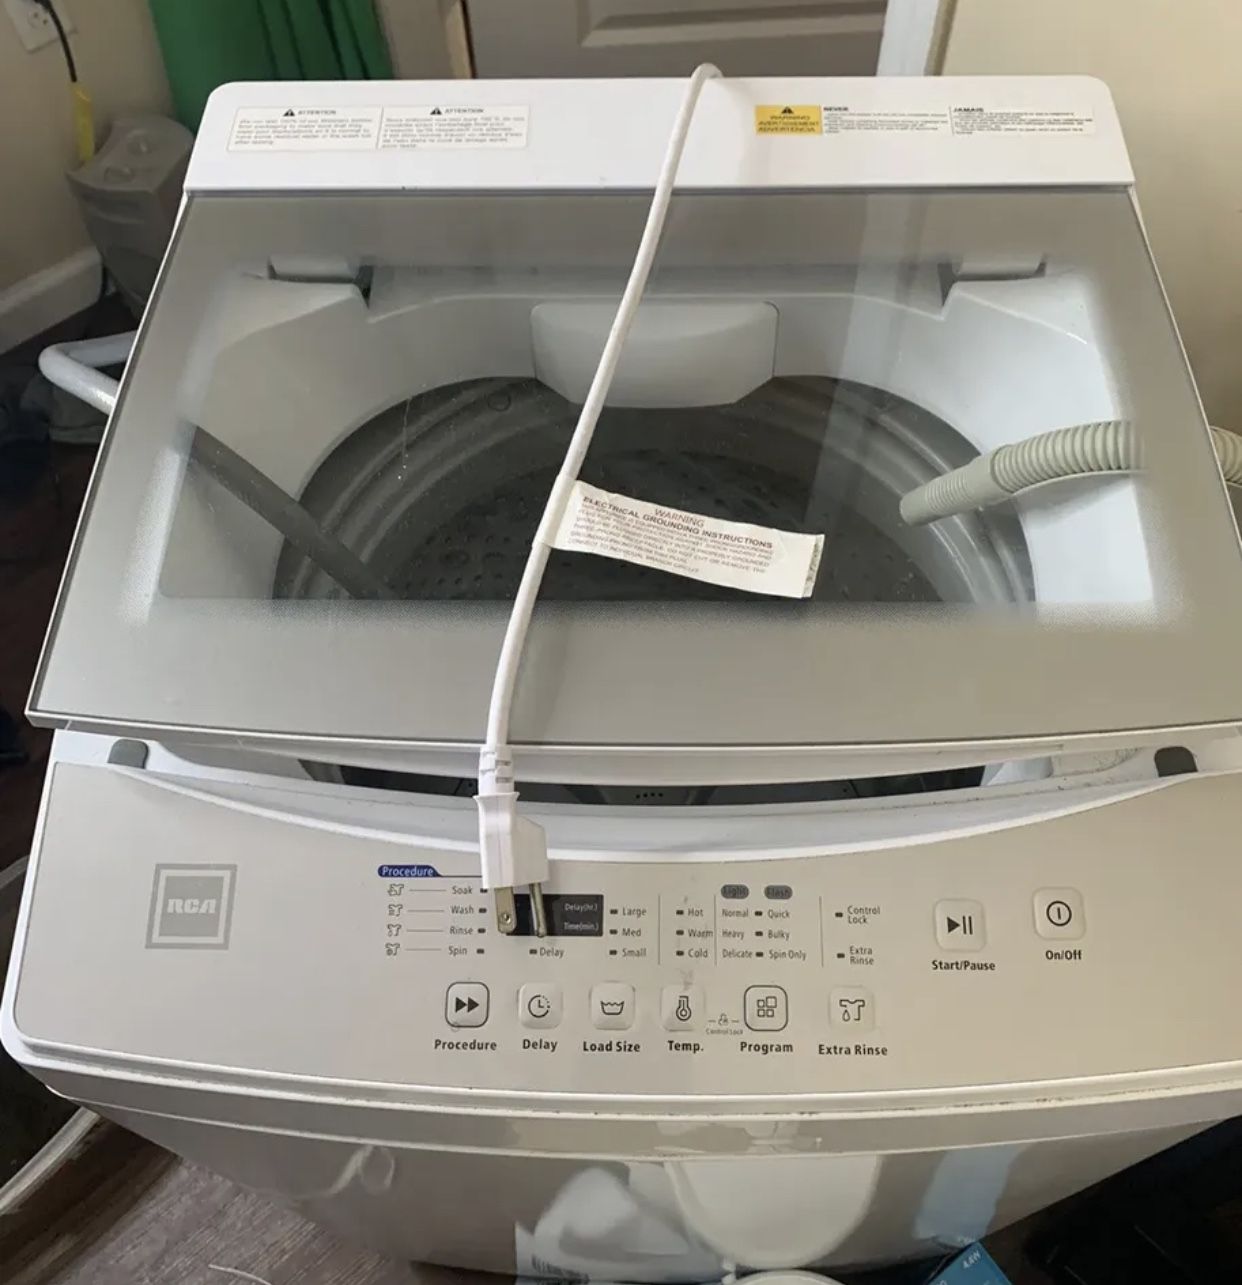 RCA Portable Washing Machine, 2.0 Cu Ft, White (Rpw210)